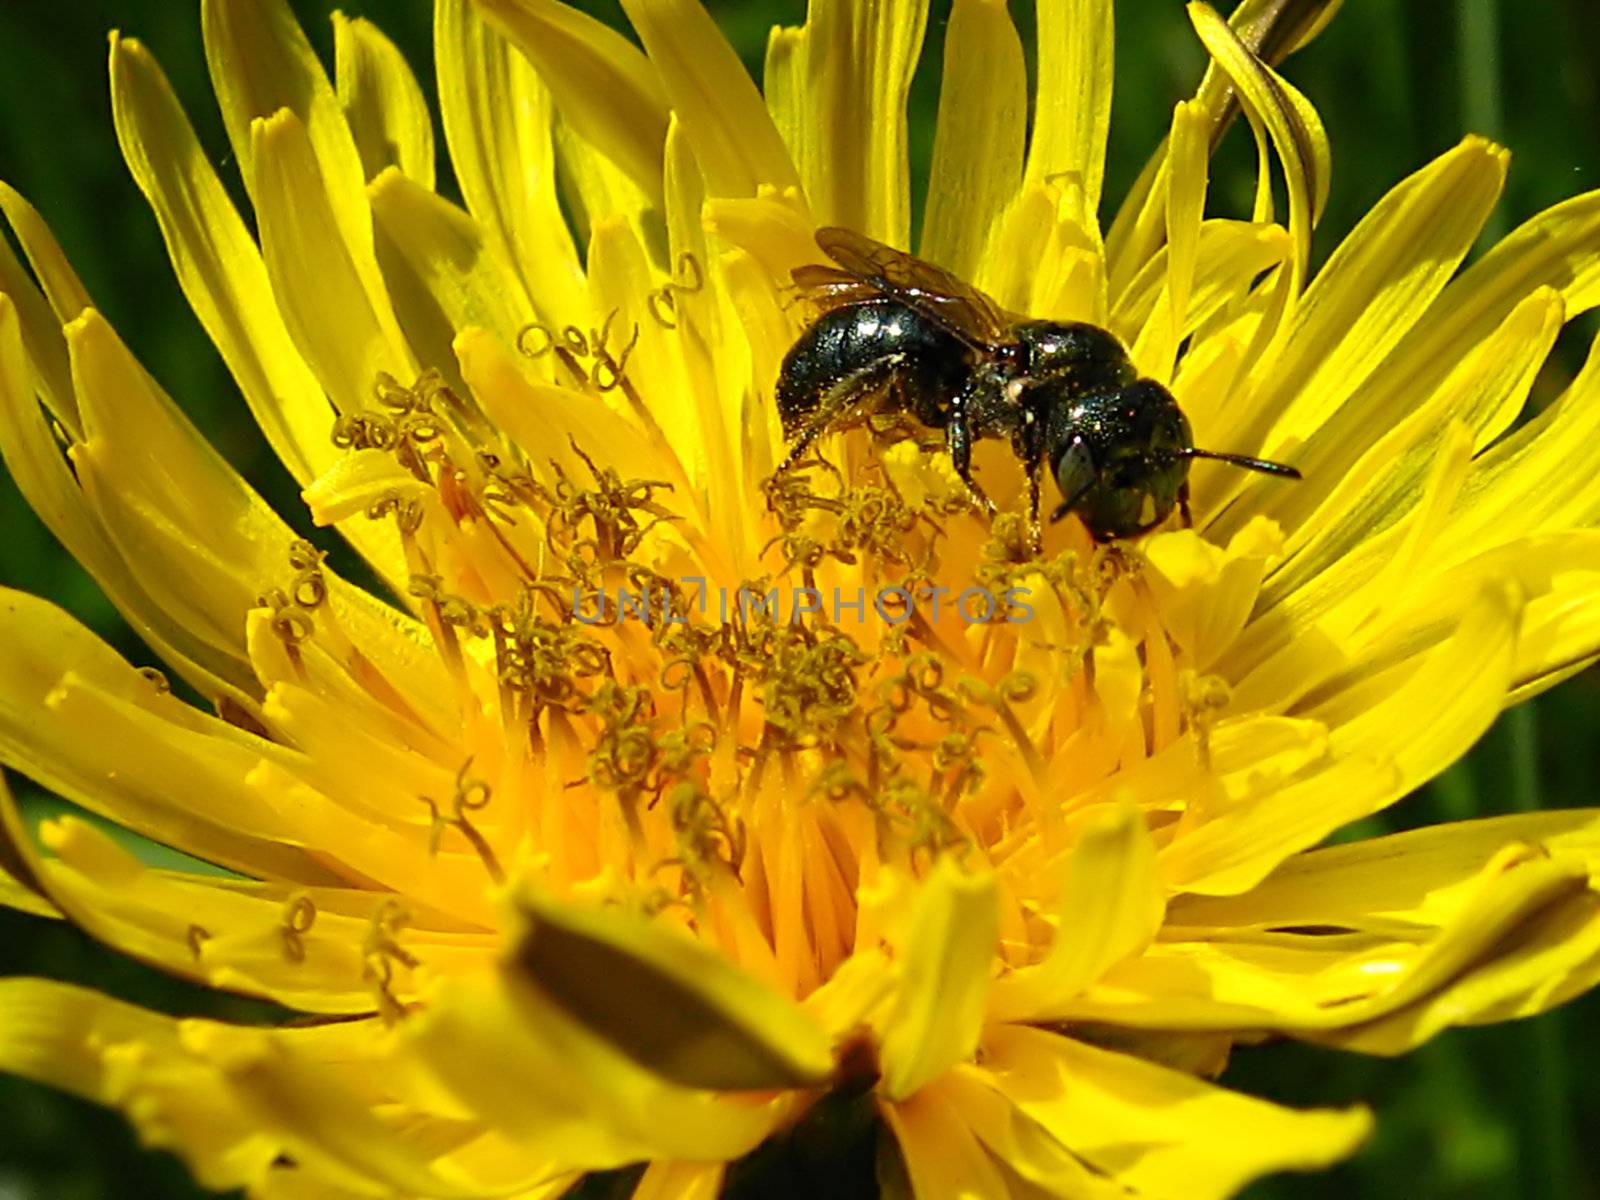 Bee On Yellow Flower by llyr8